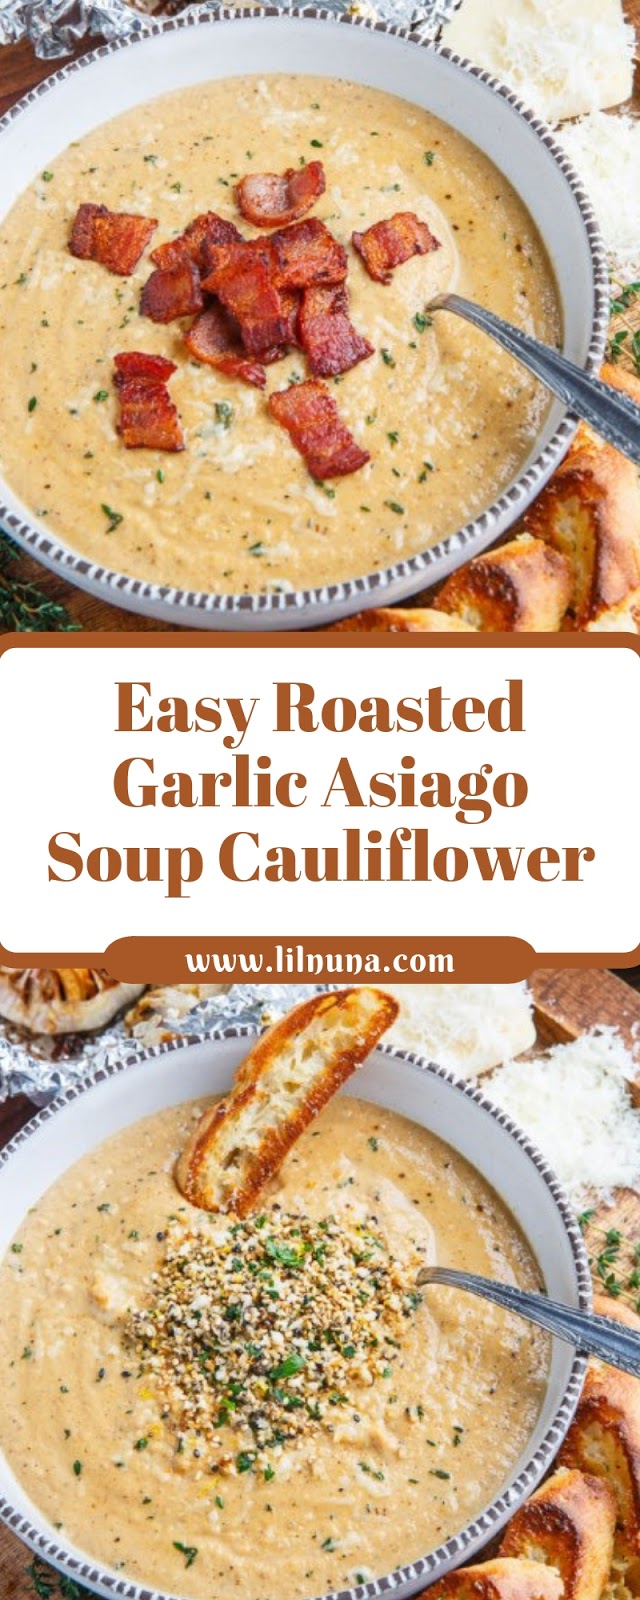 Easy Roasted Garlic Asiago Soup Cauliflower